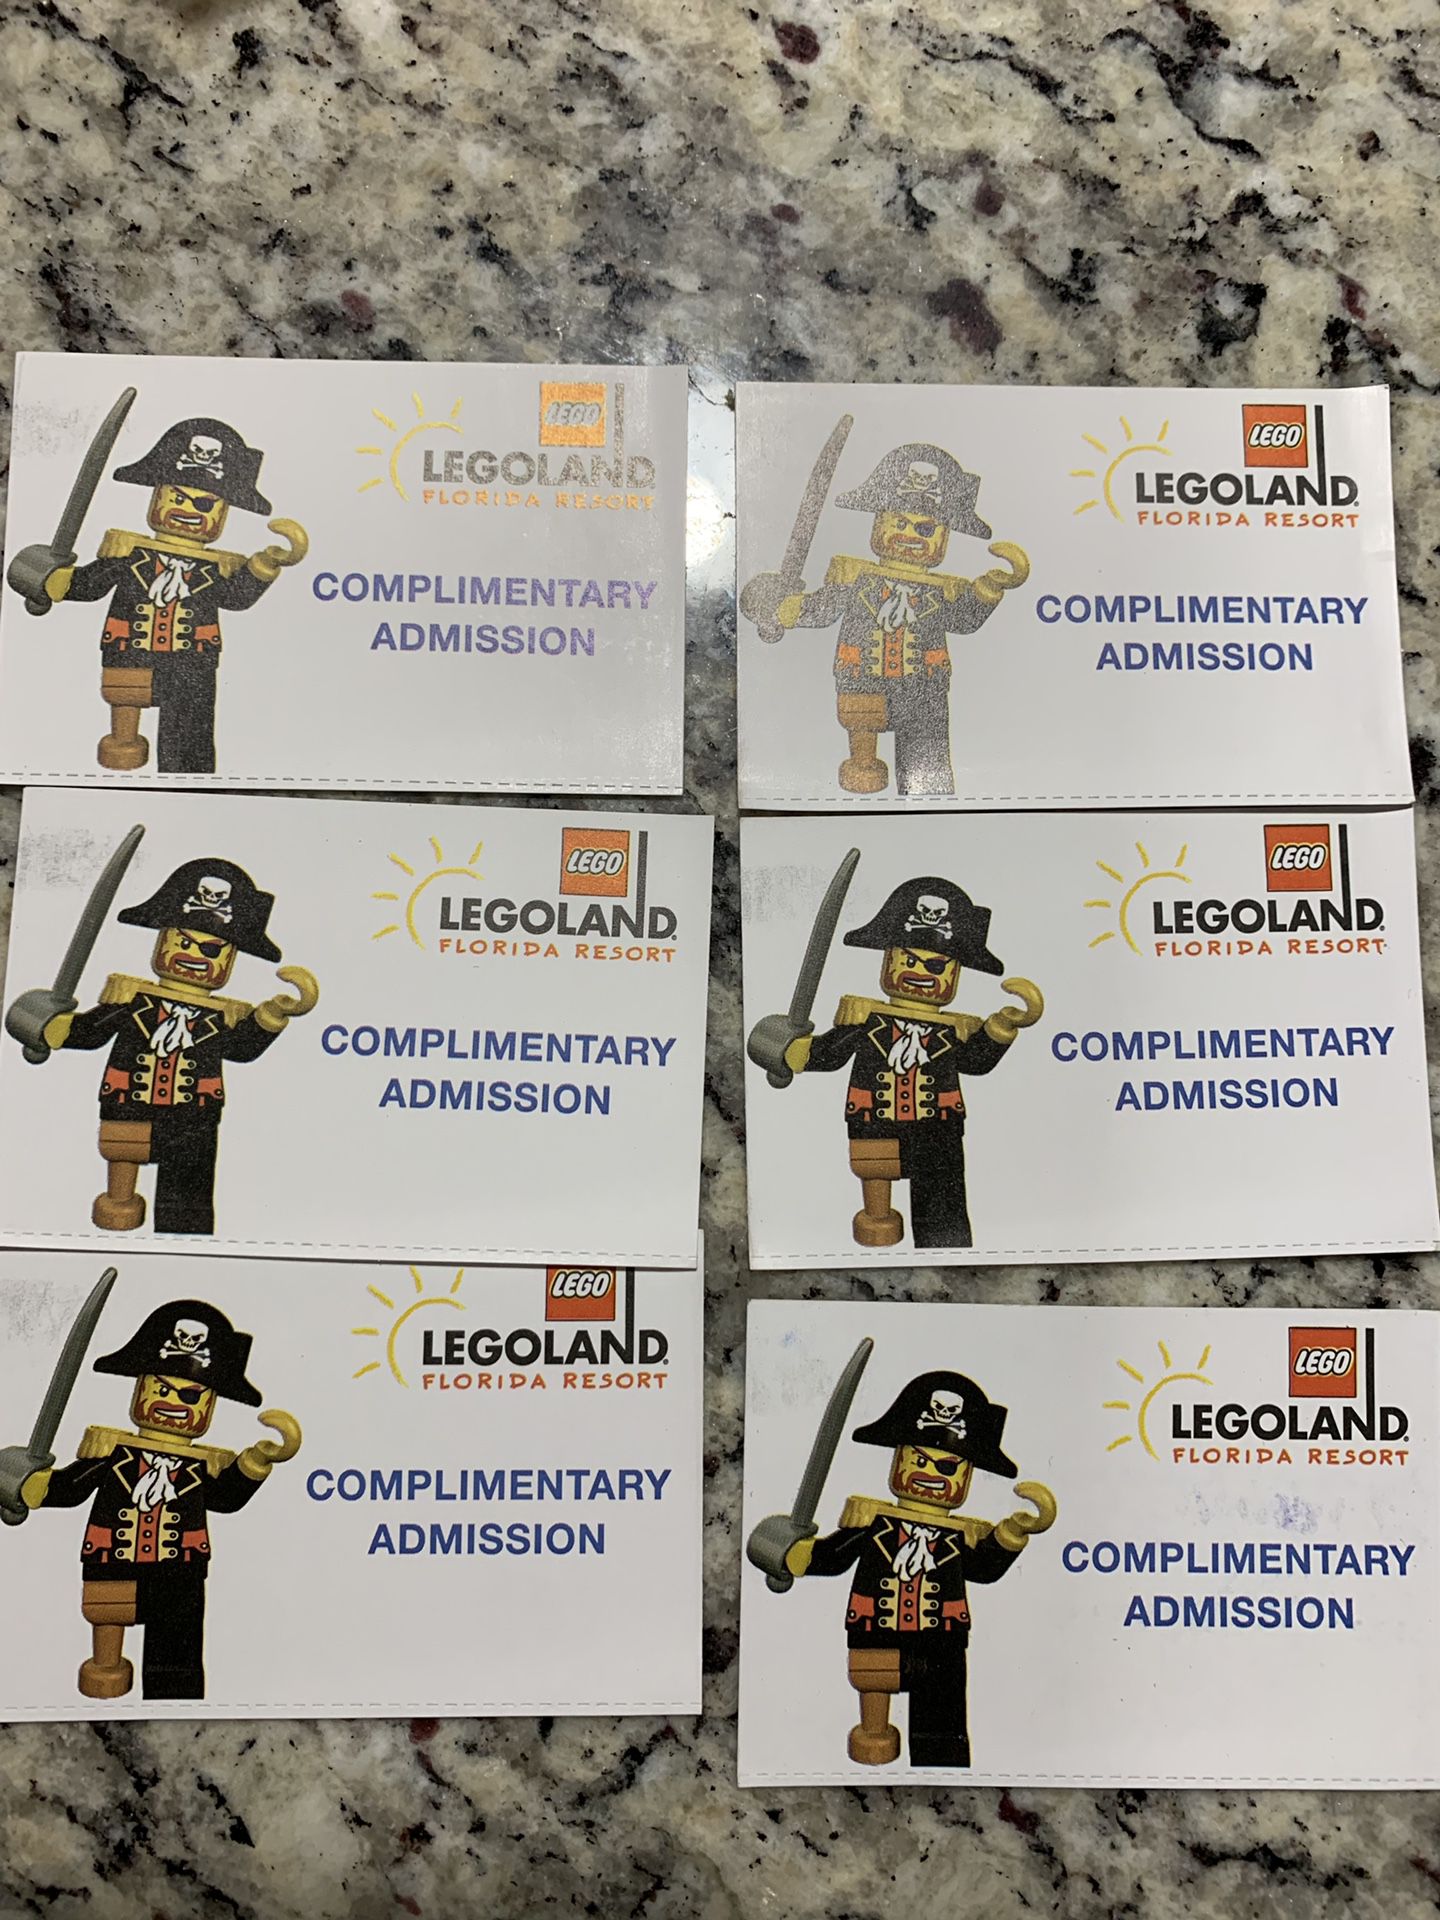 Lego land florida entry tickets